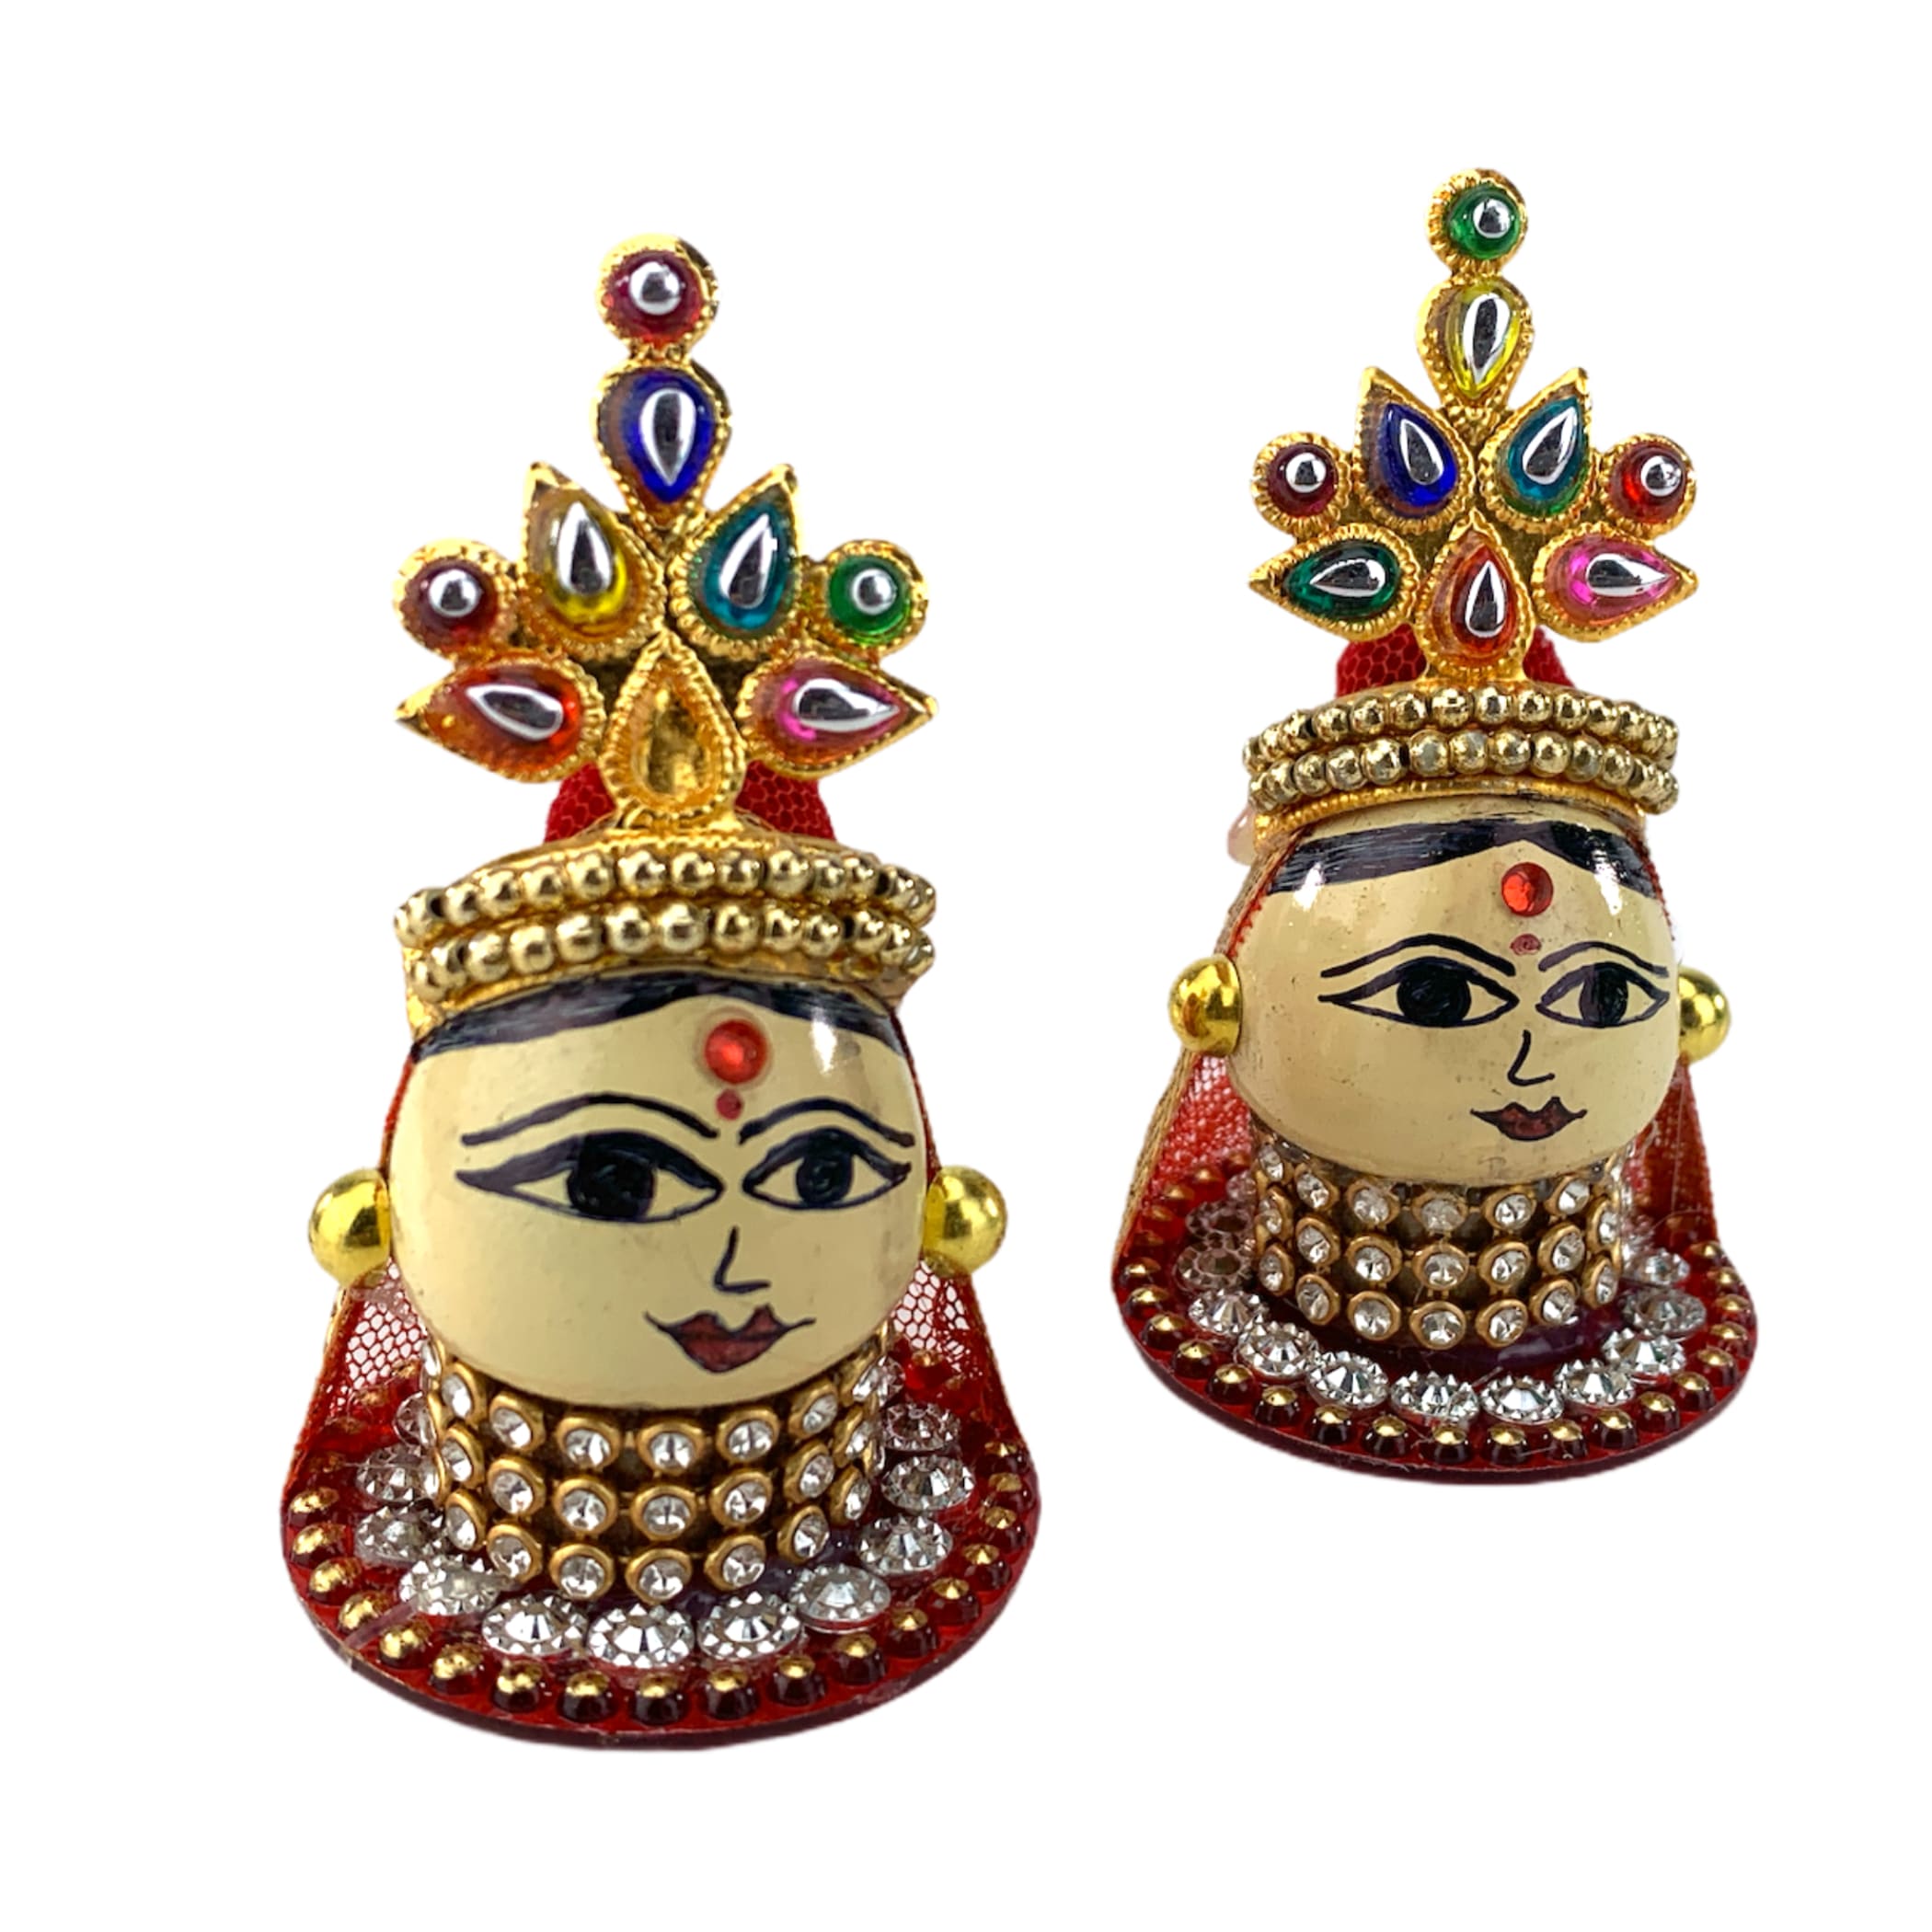 Goddess riddhi siddhi set idols spouse of ganesha spiritual